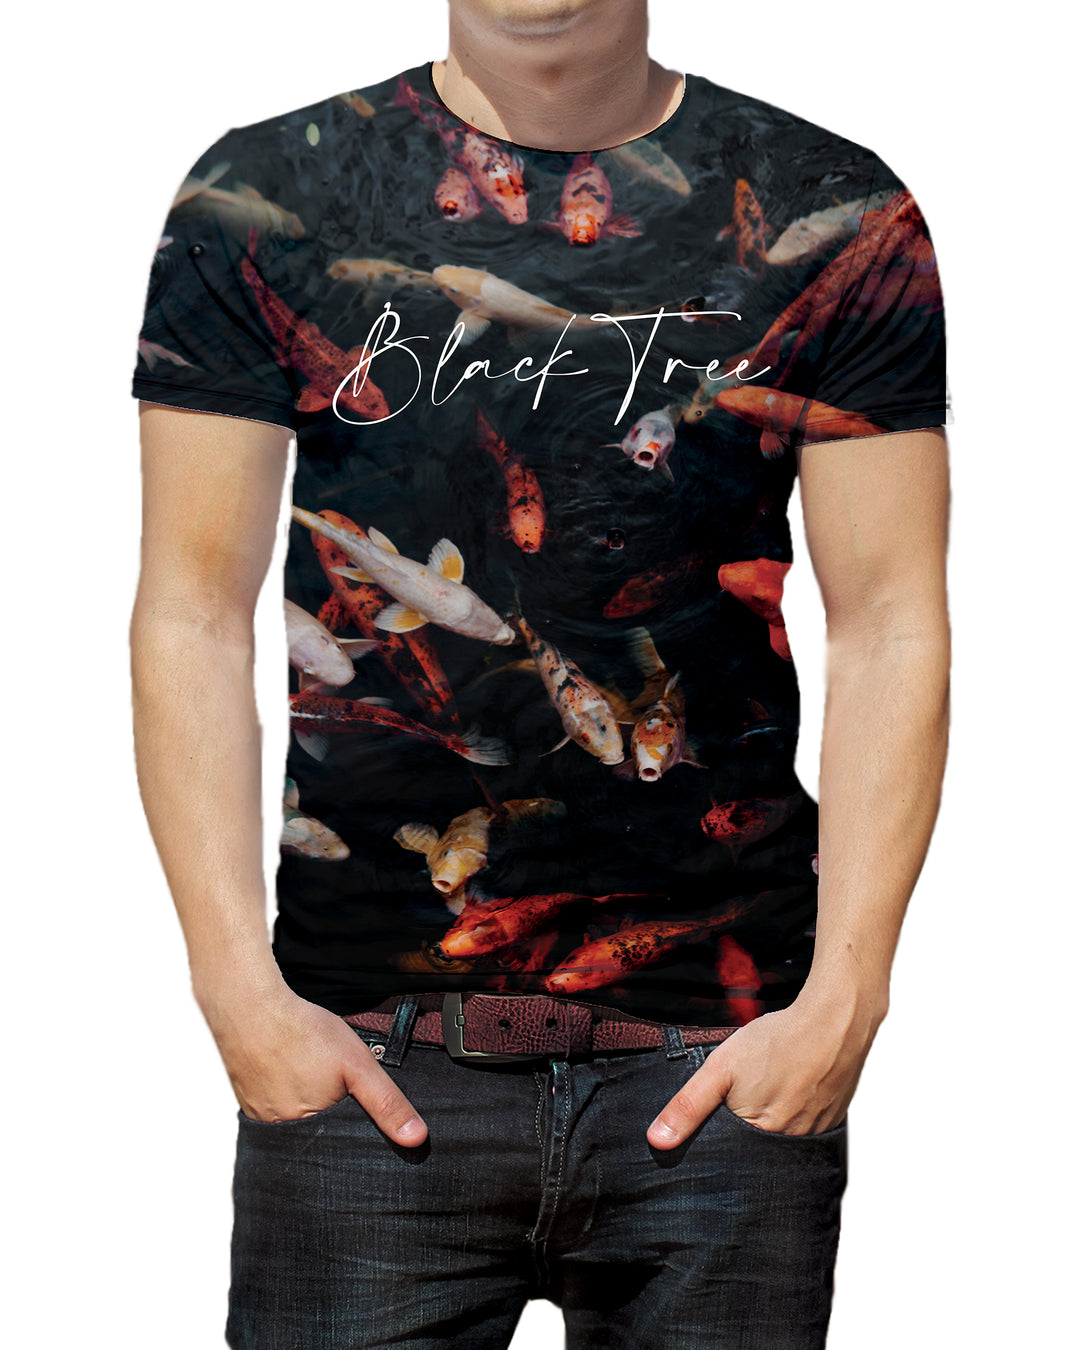 BlackTree Casual  Cool T-shirt -BT253.